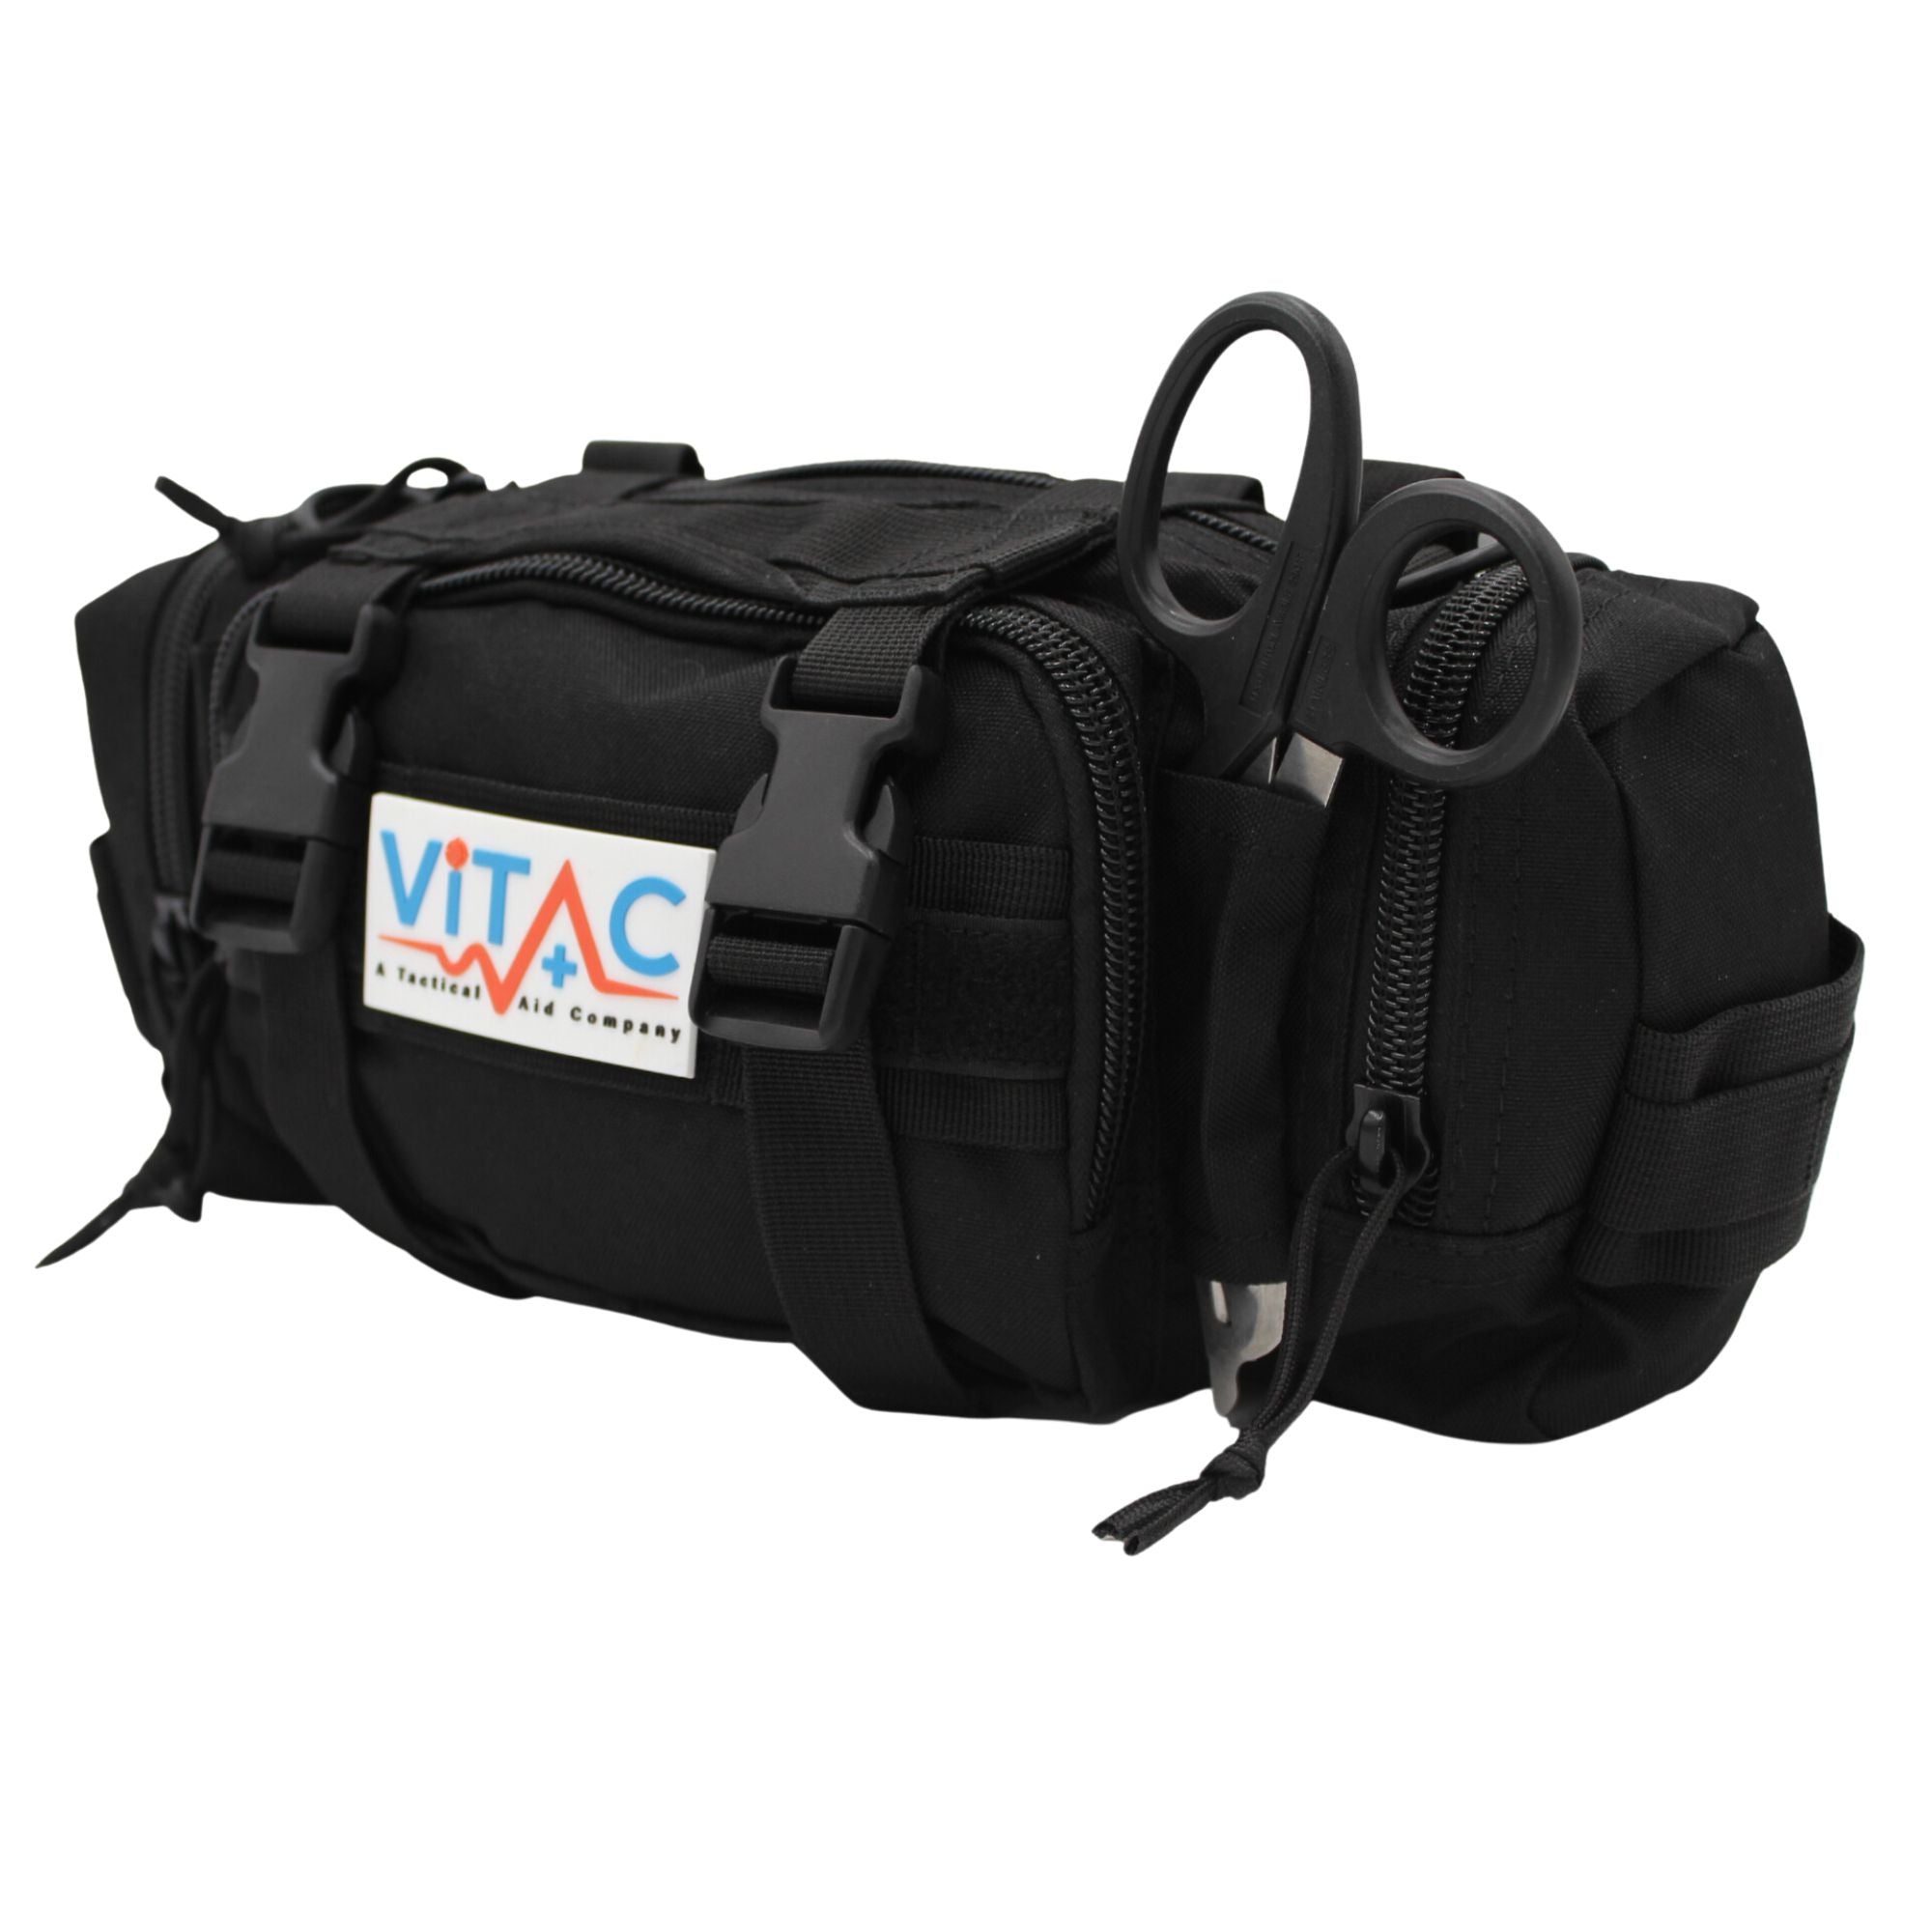 ViTAC Advanced Adventurer First Aid Kit Black